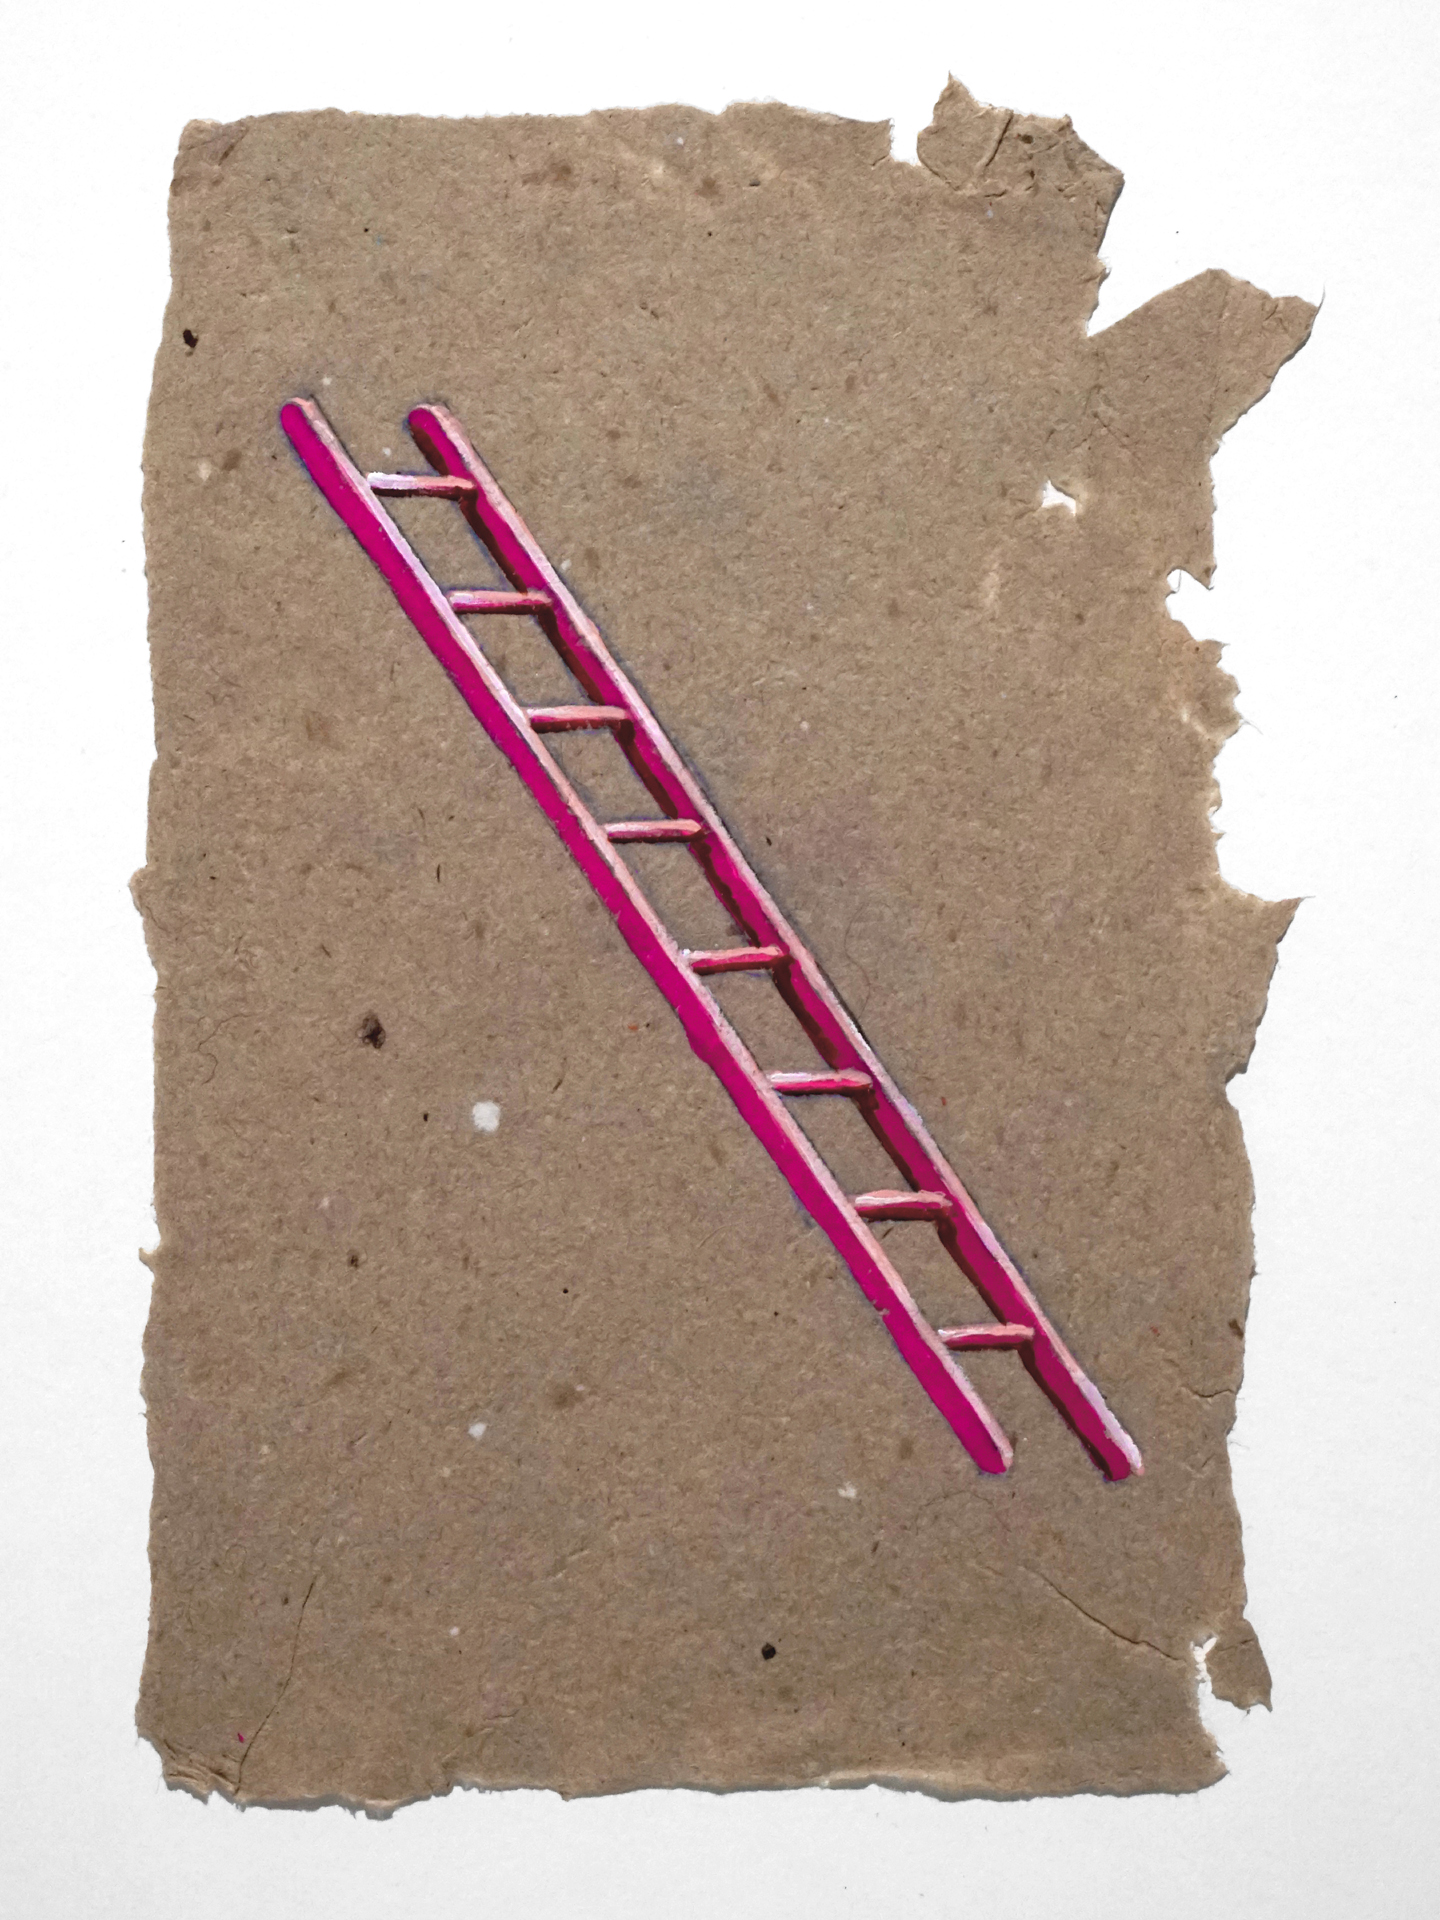 Untitled (pink ladder), 2010